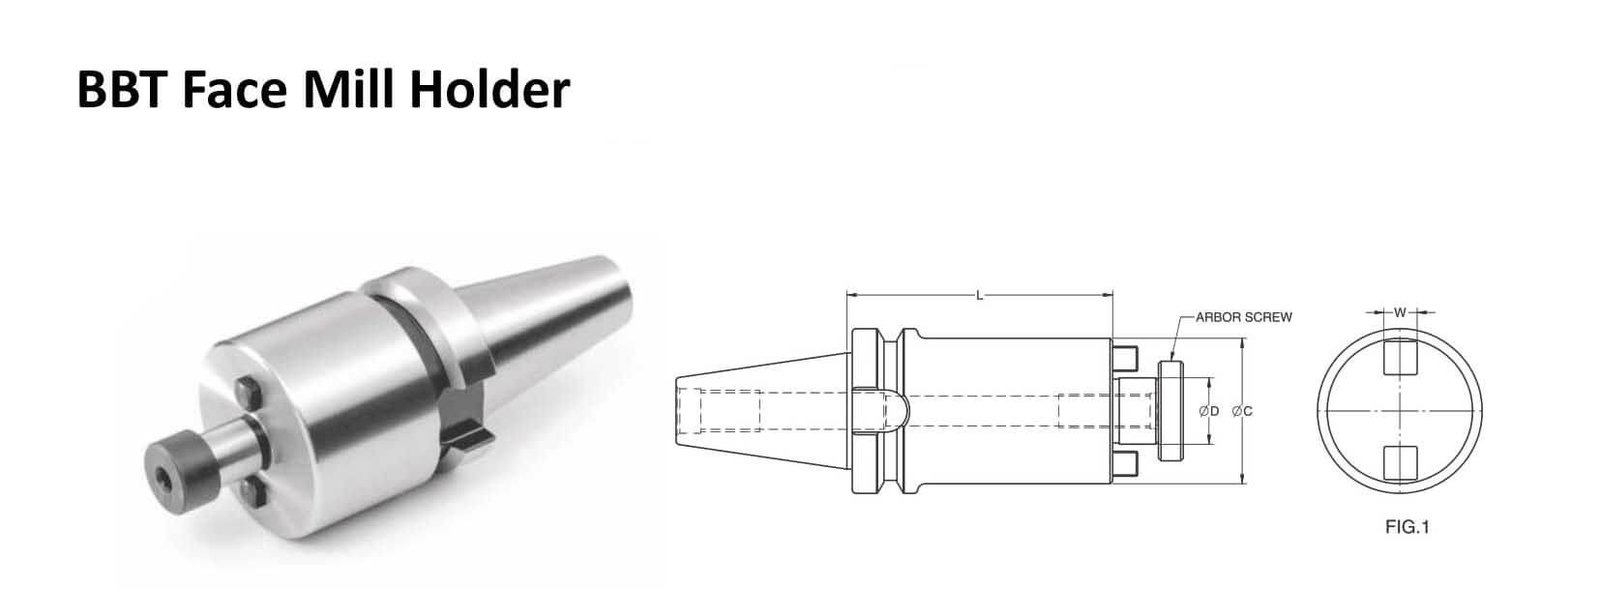 BBT30 FMH 0.750 - 2.00 Face Mill Holder (Balanced to 2.5G 25000 RPM)